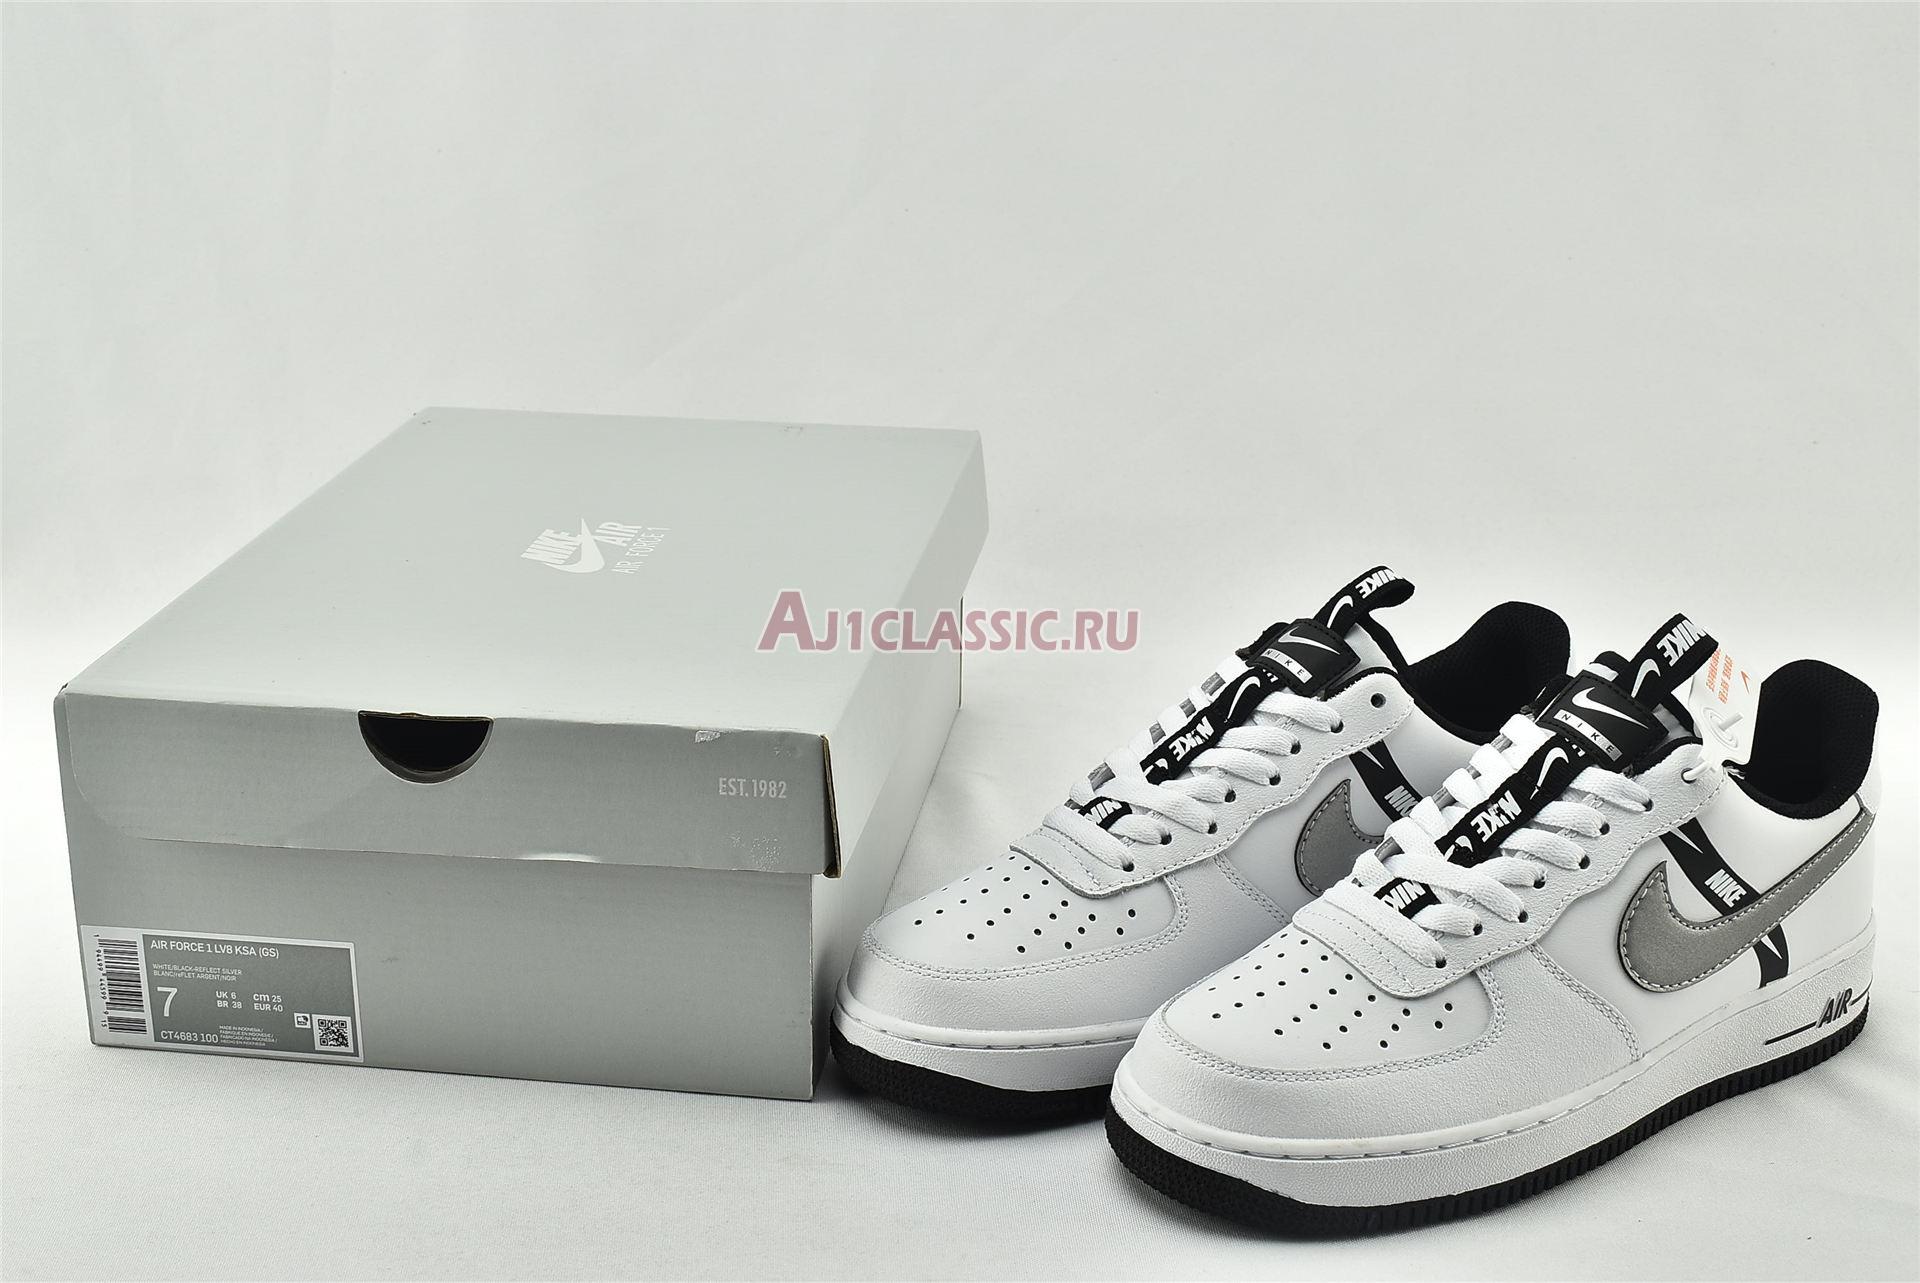 Nike Air Force 1 LV8 KSA GS Worldwide Pack - White Reflect Silver CT4683-100 White/Black/Reflect Silver Sneakers